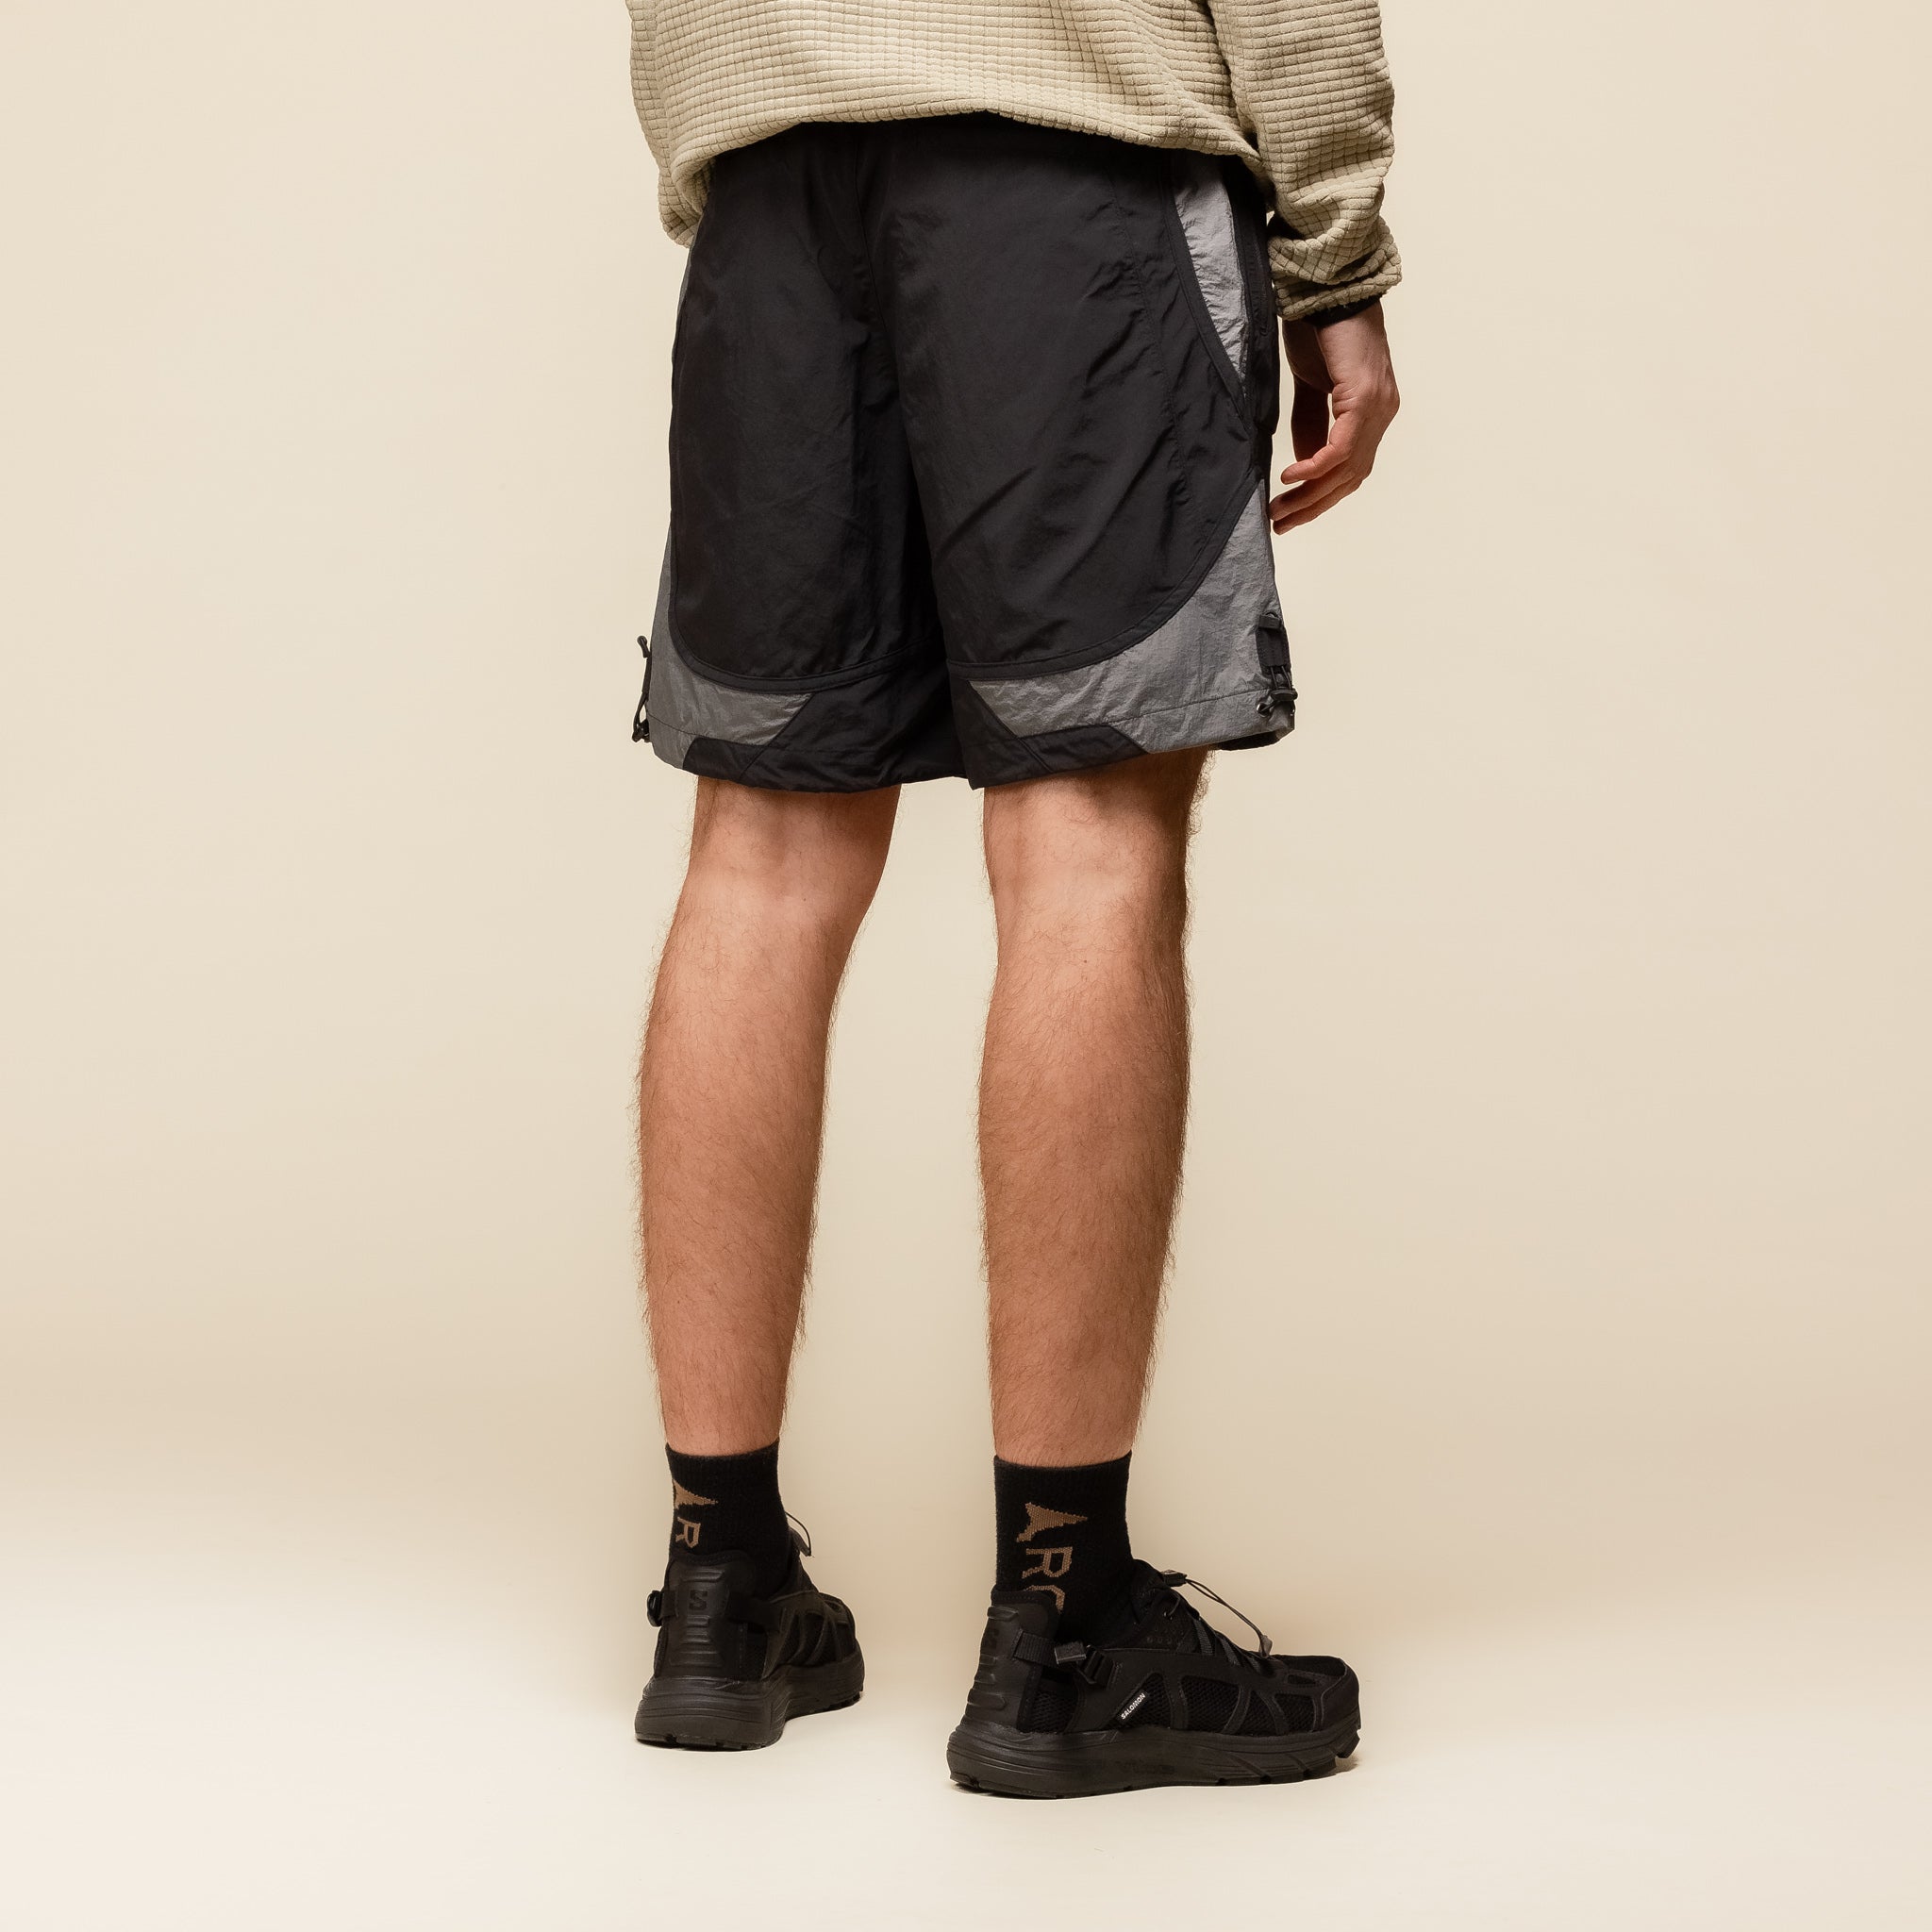 VNGROCOMTHA San San Gear - Nylon Shorts - Black